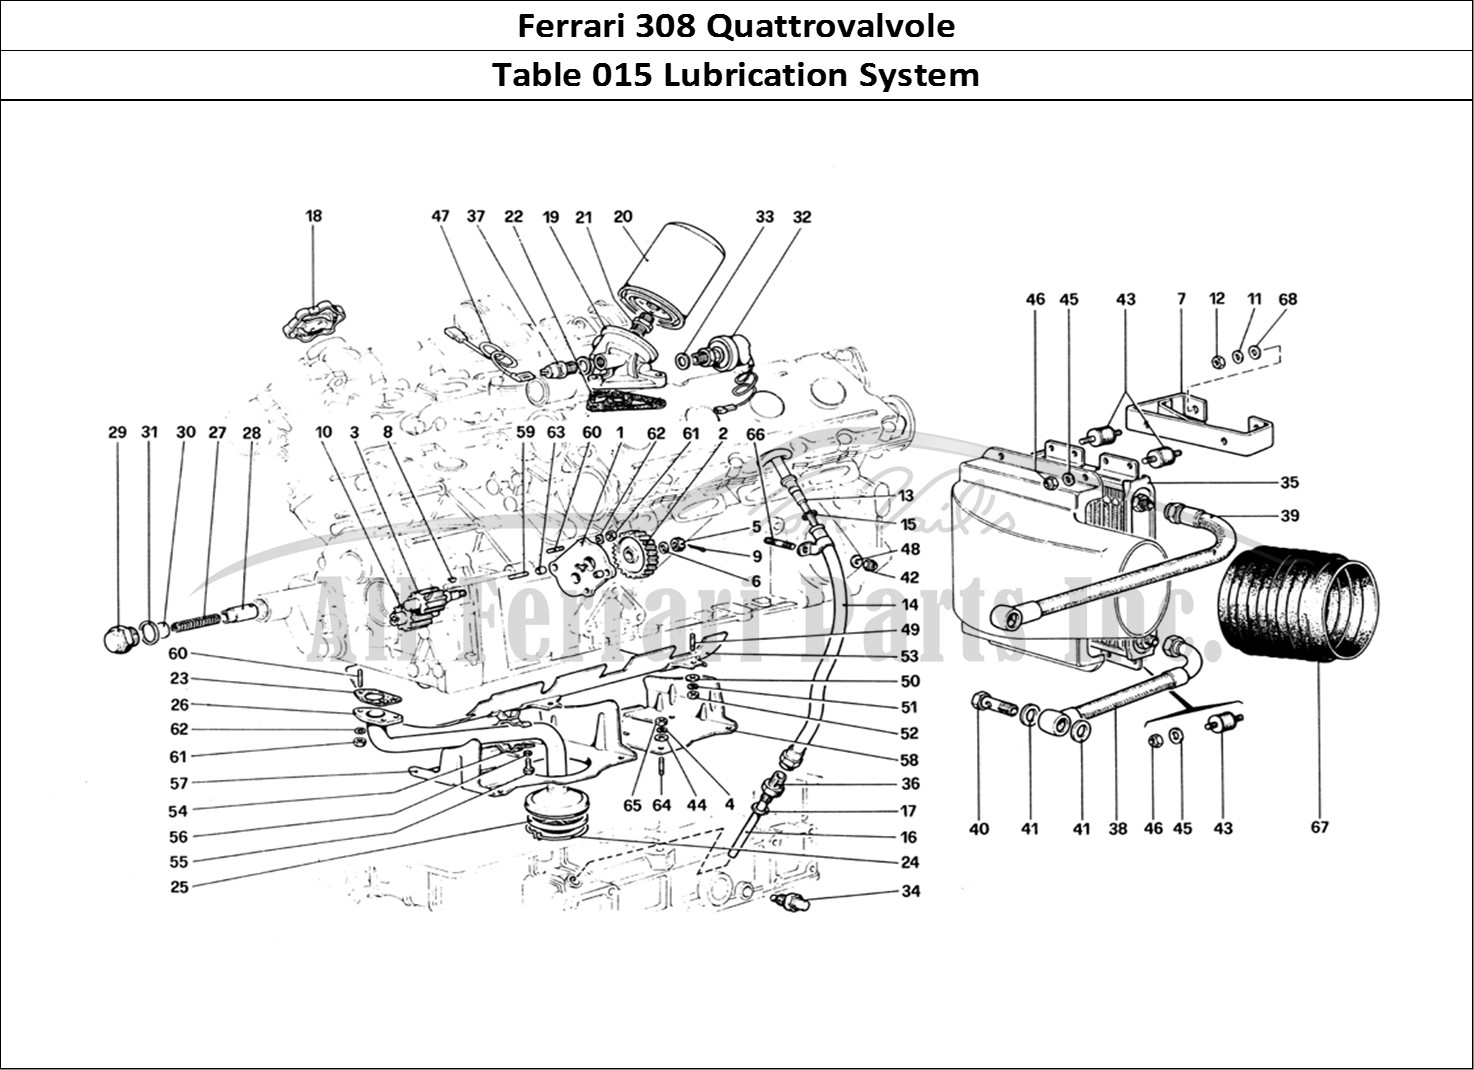 Ferrari Parts Ferrari 308 Quattrovalvole (1985) Page 015 Lubrication System